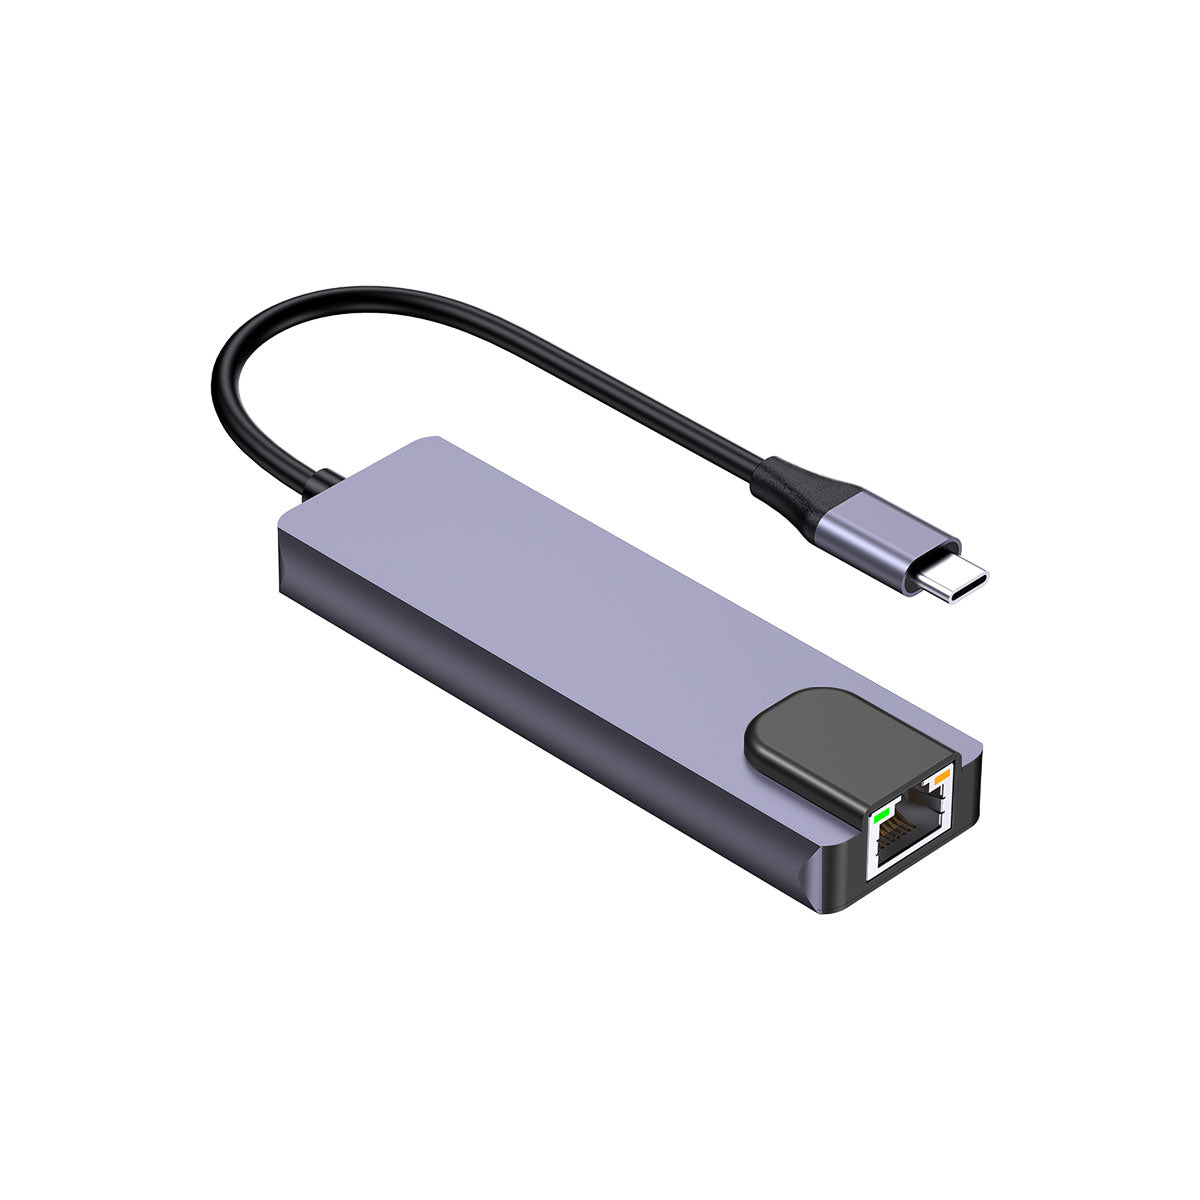 GEEKOM Mini 5 - 1 USB ハブ - 高性能AIミニＰＣ - 【公式】GEEKOM(ギコム)日本